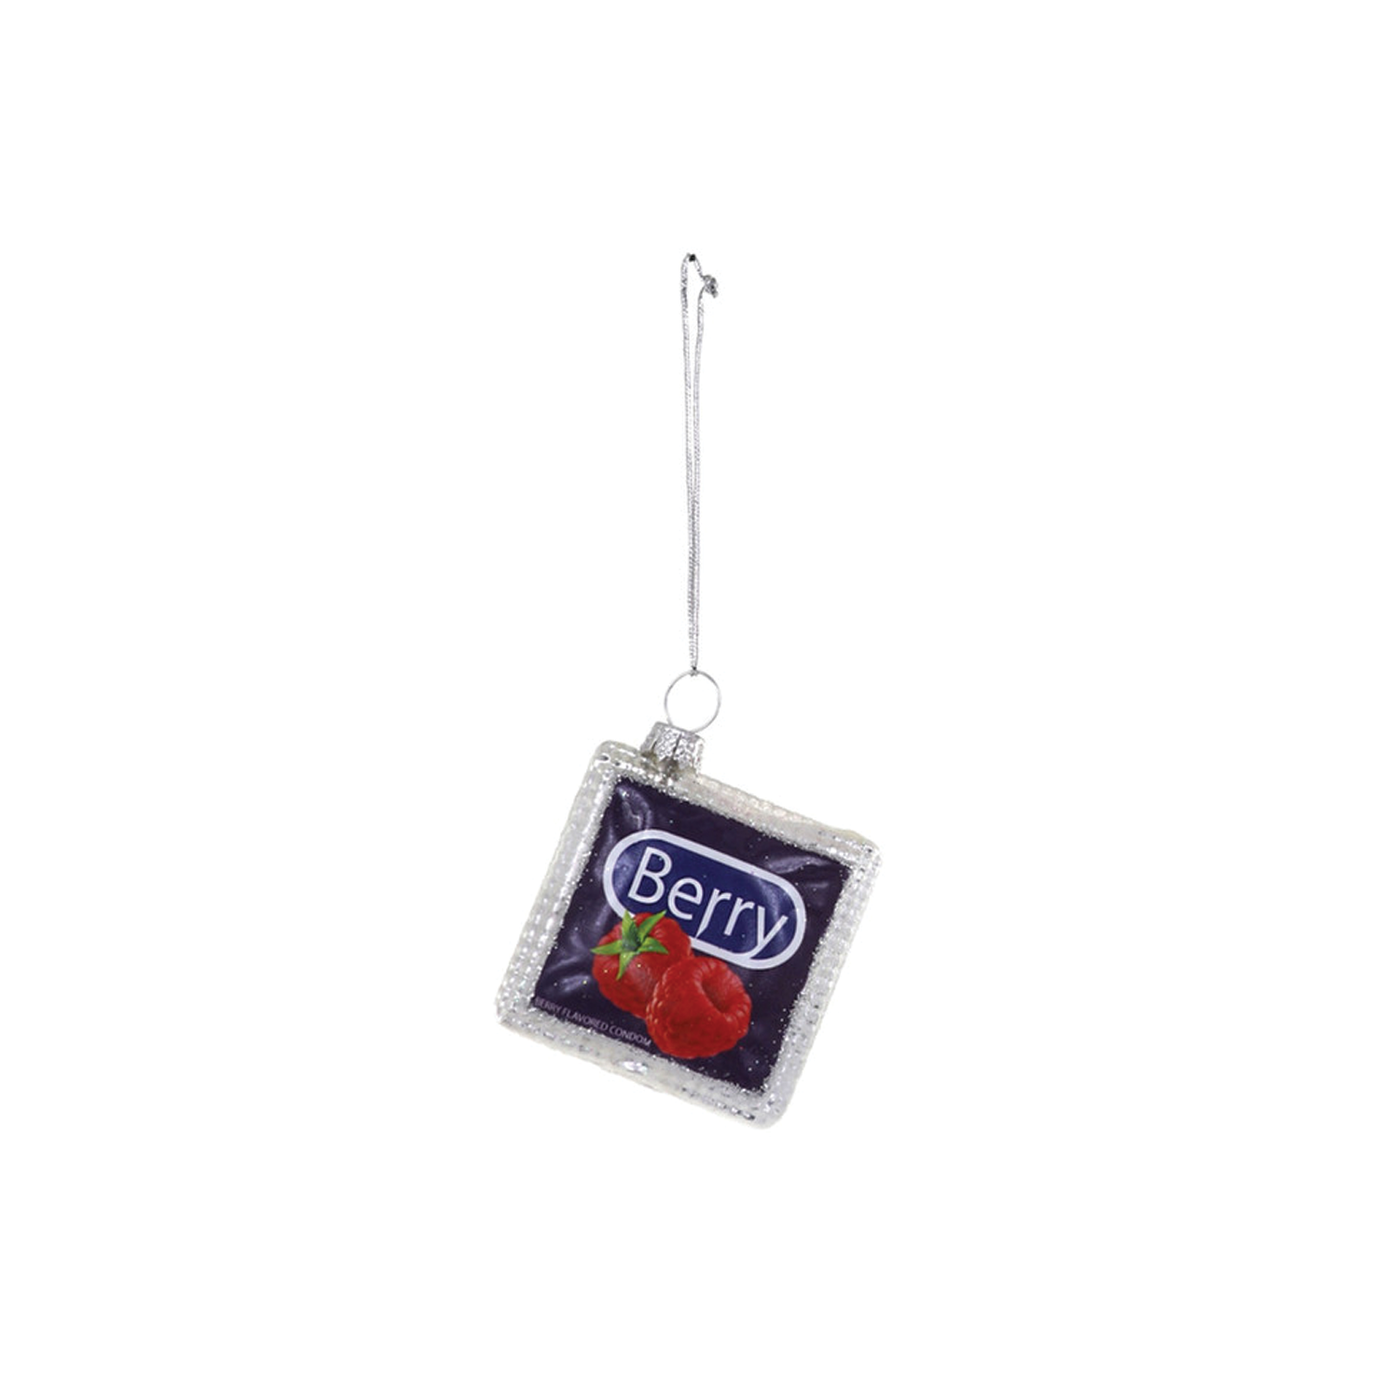 Flavored Condom Ornament - Berry